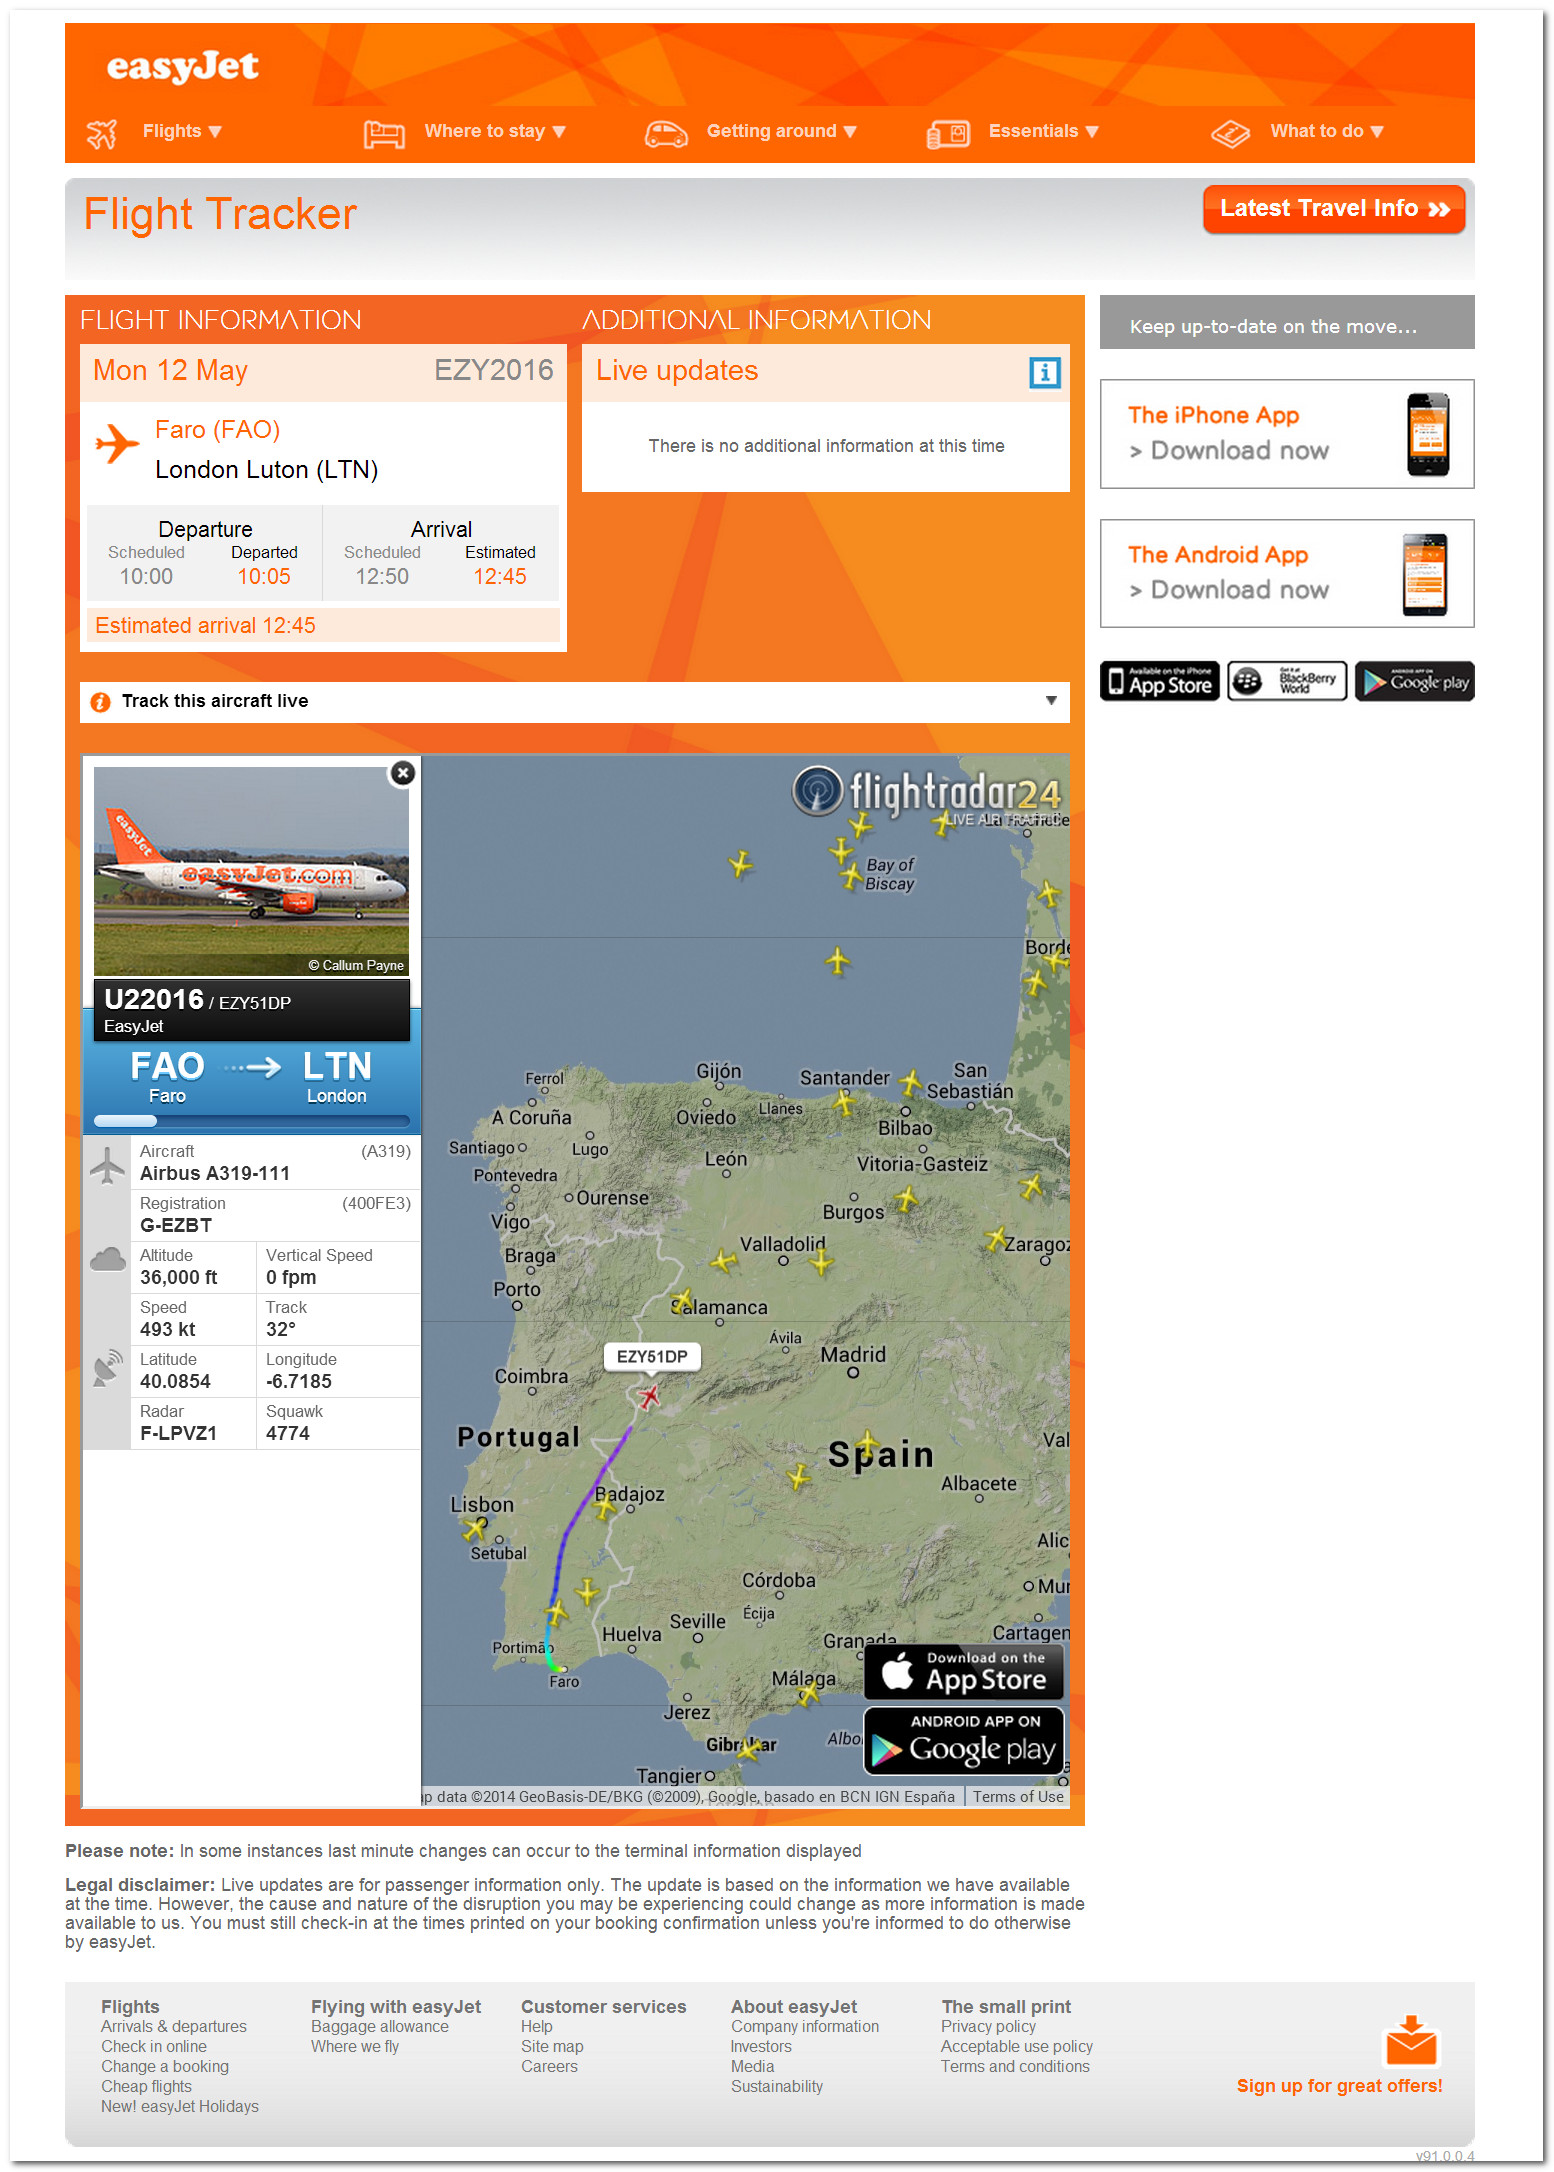 easyJet's live Flight Tracker tool in partnership with Flightradar24